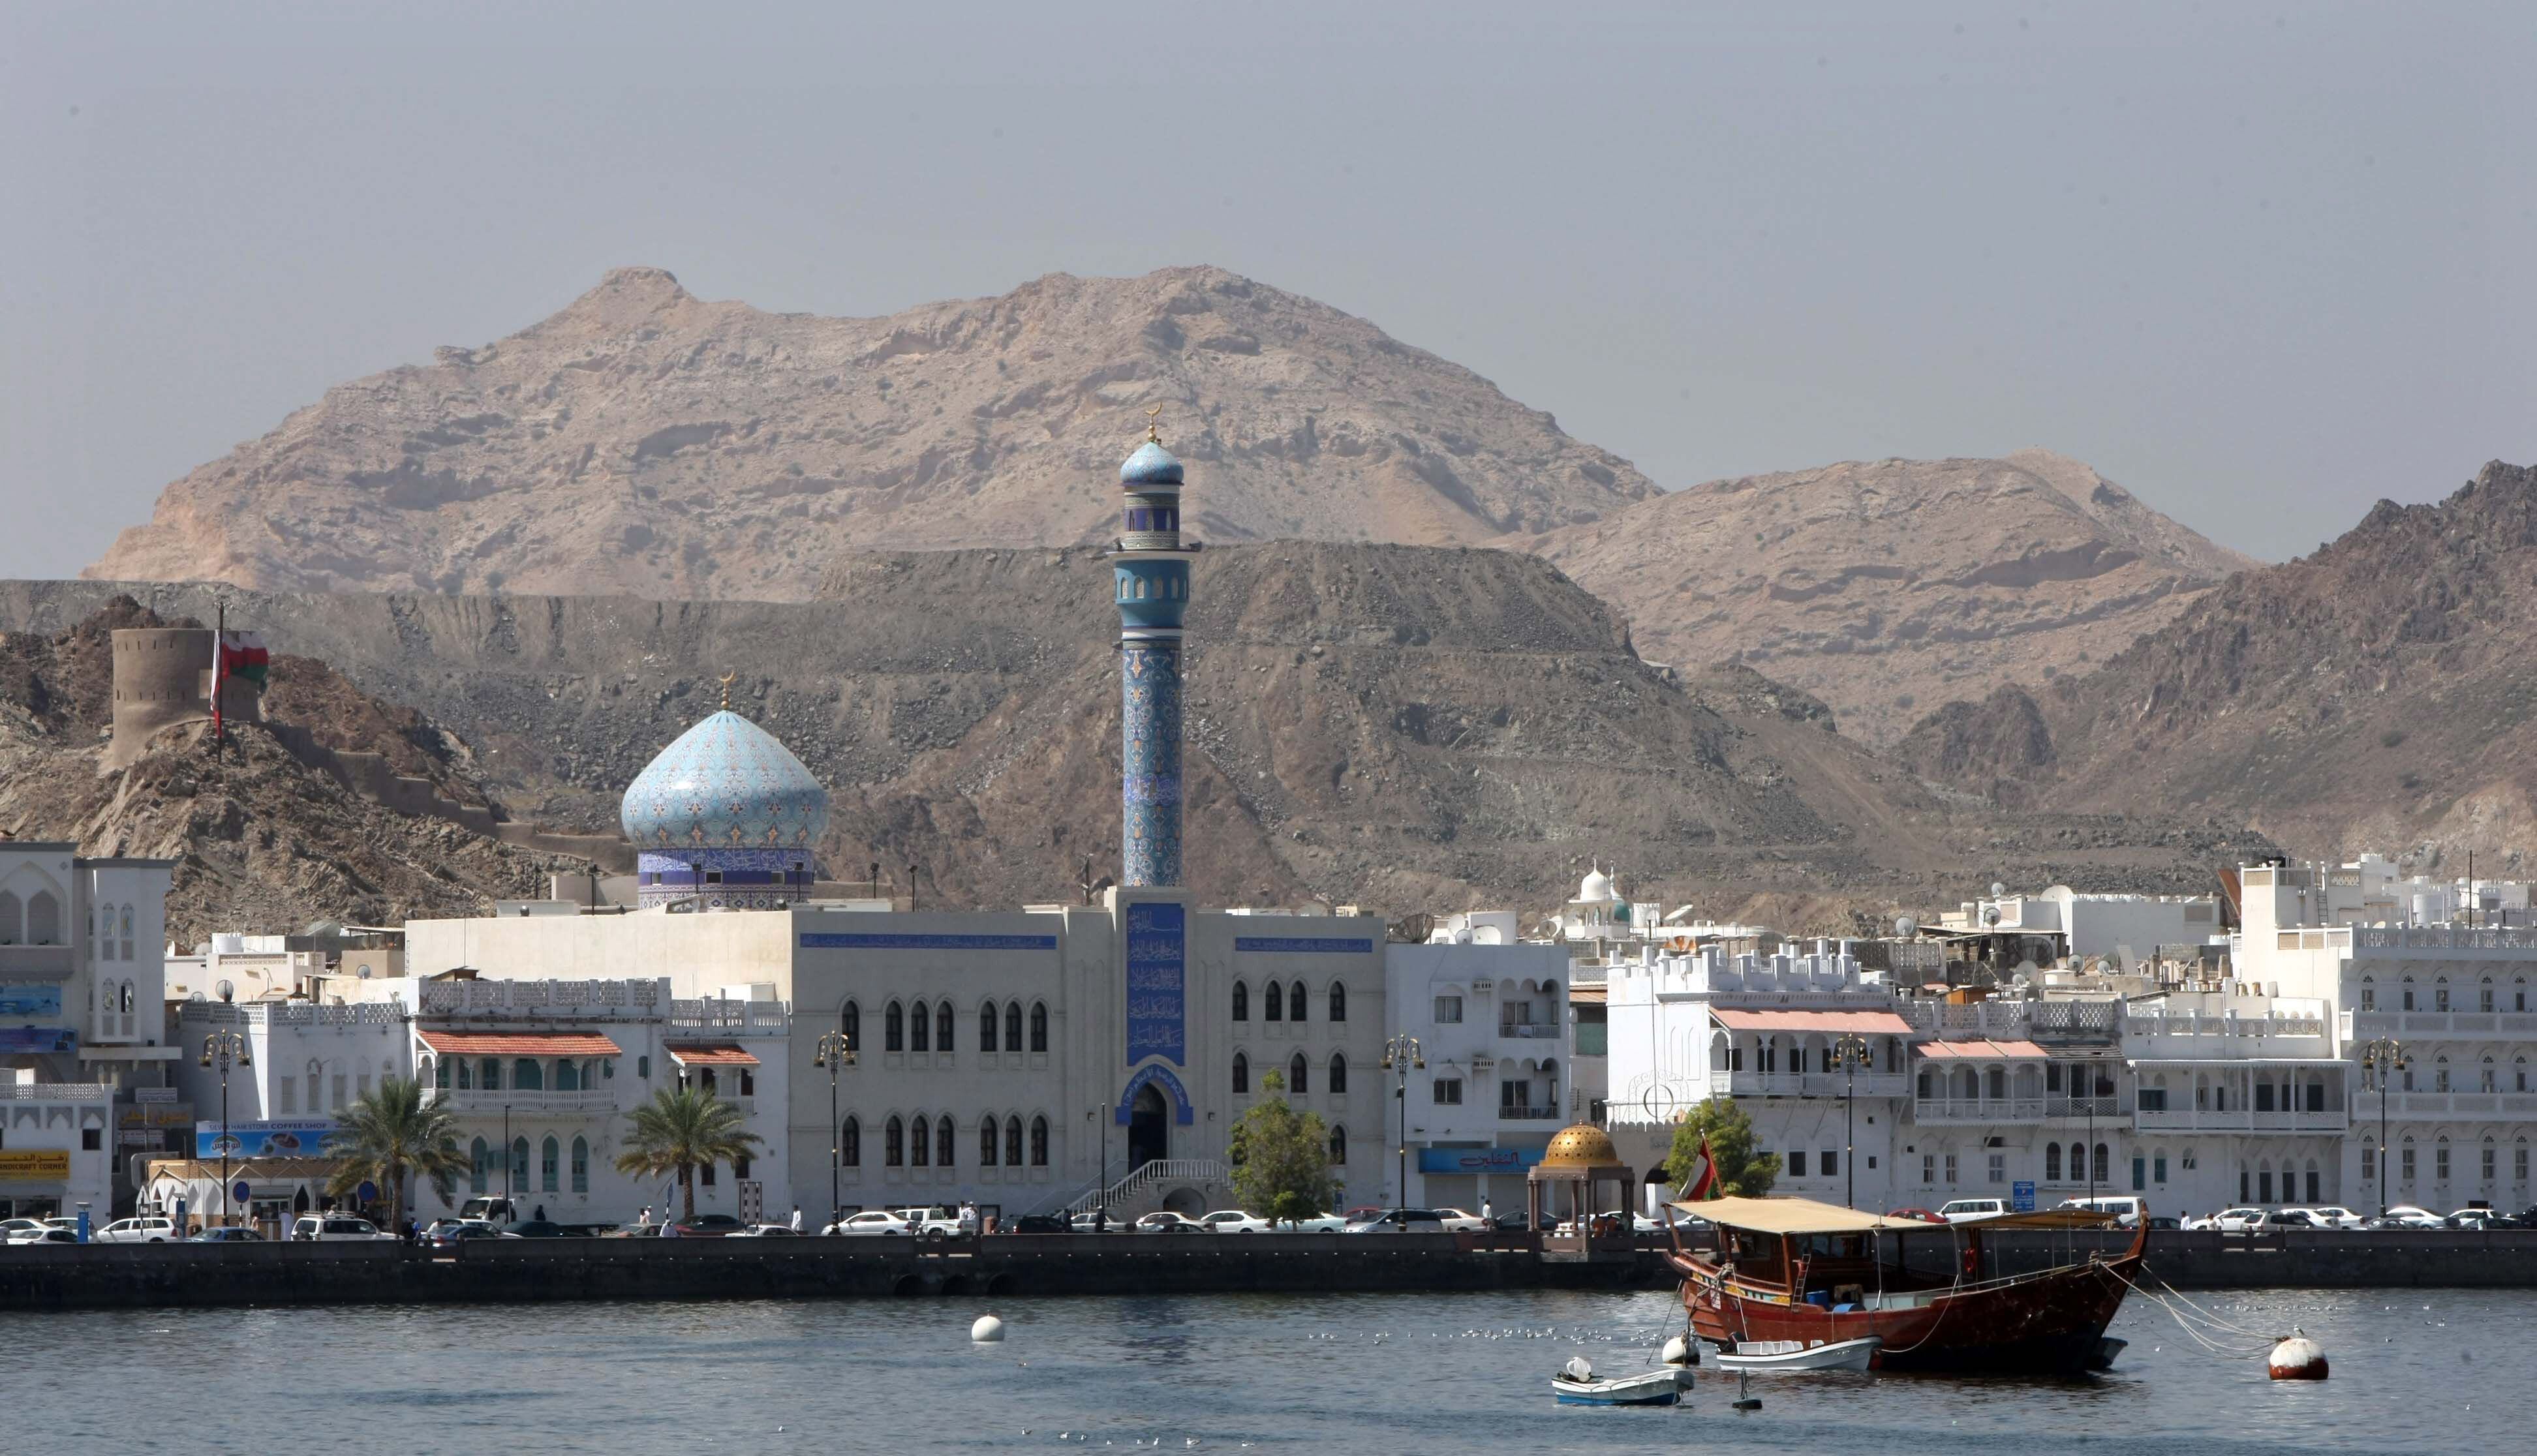 Oman Observer - Legal actions taken against several expats